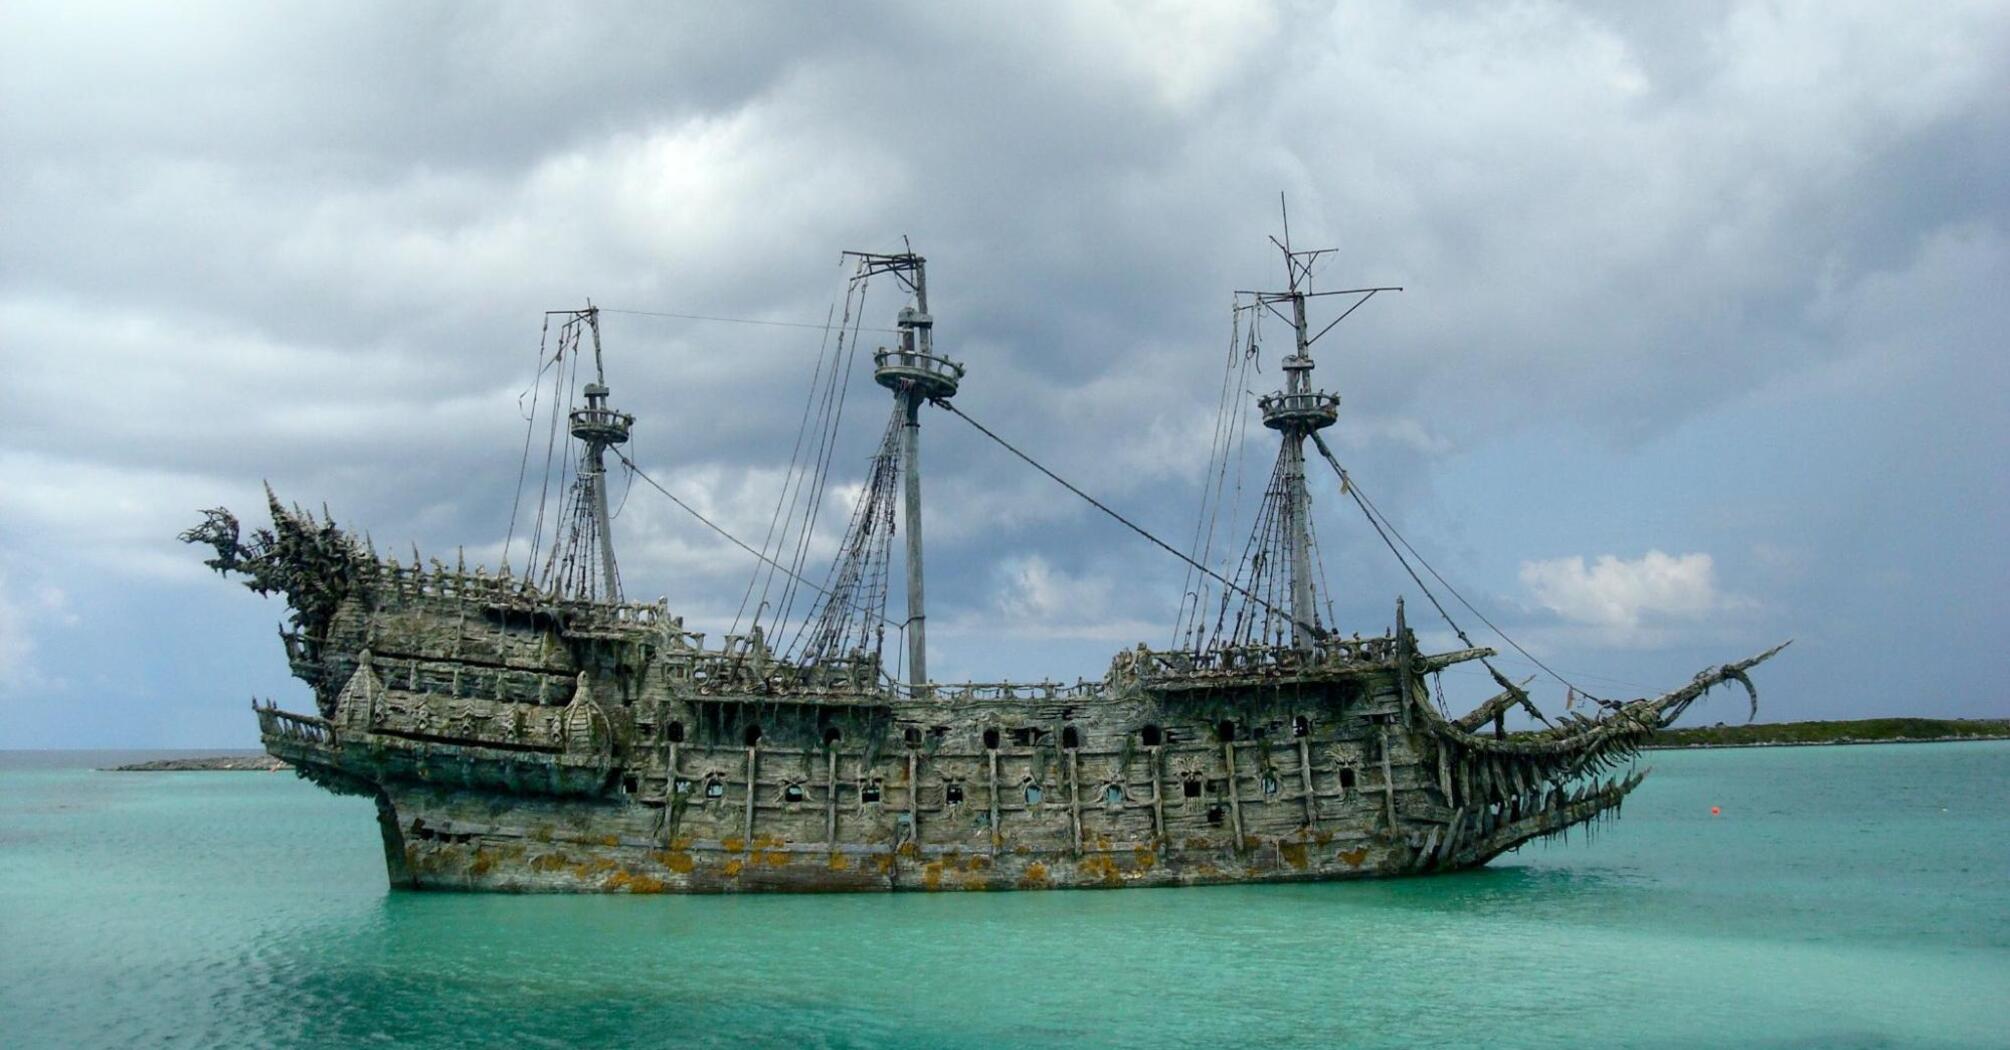 Pirate ship "Black Pearl"